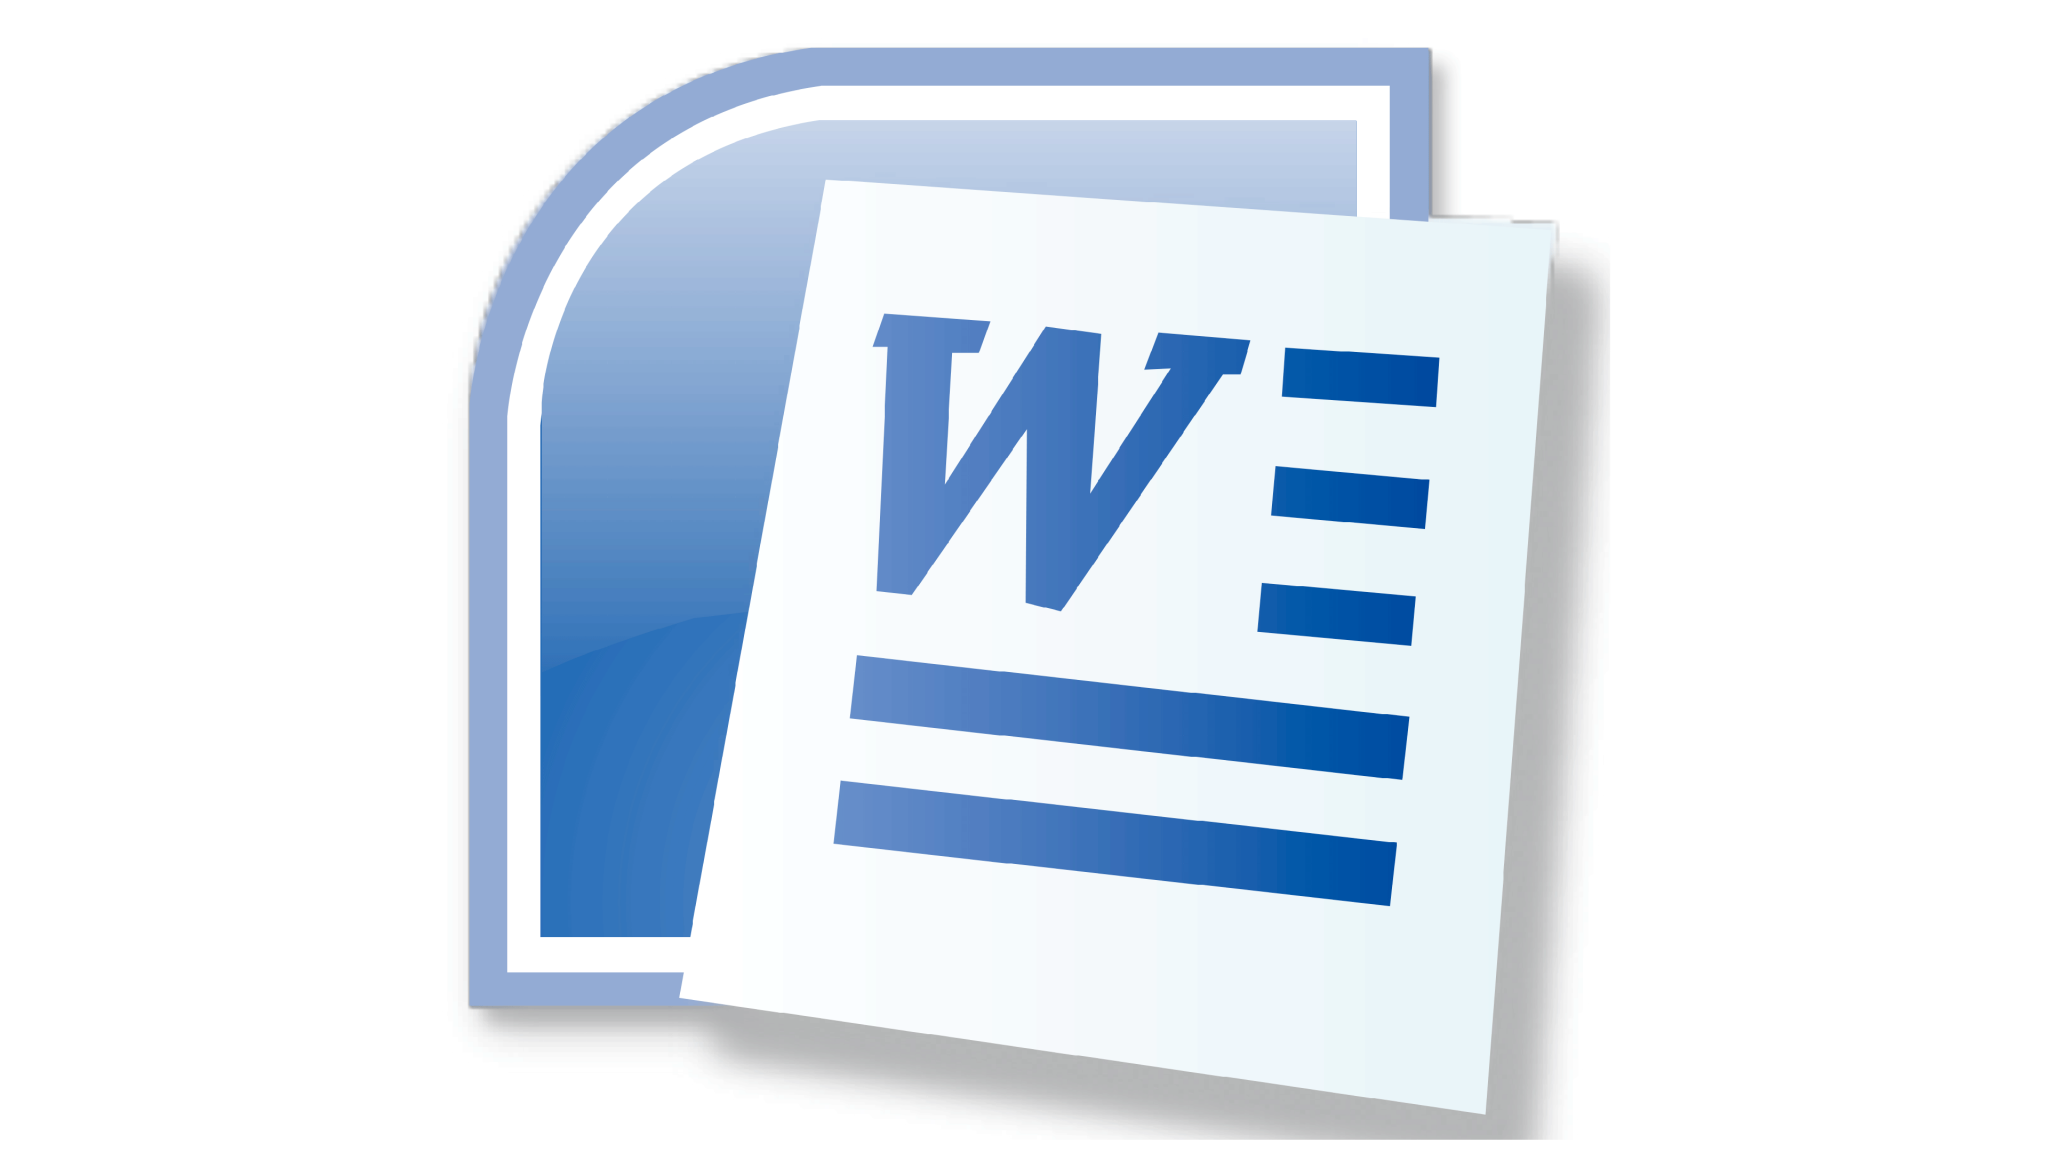 Ярлык ворд. Microsoft Office Word логотип. Значок Майкрософт ворд 2010. MS Word 2007 значок. Microsoft Office Word 2010 логотип.